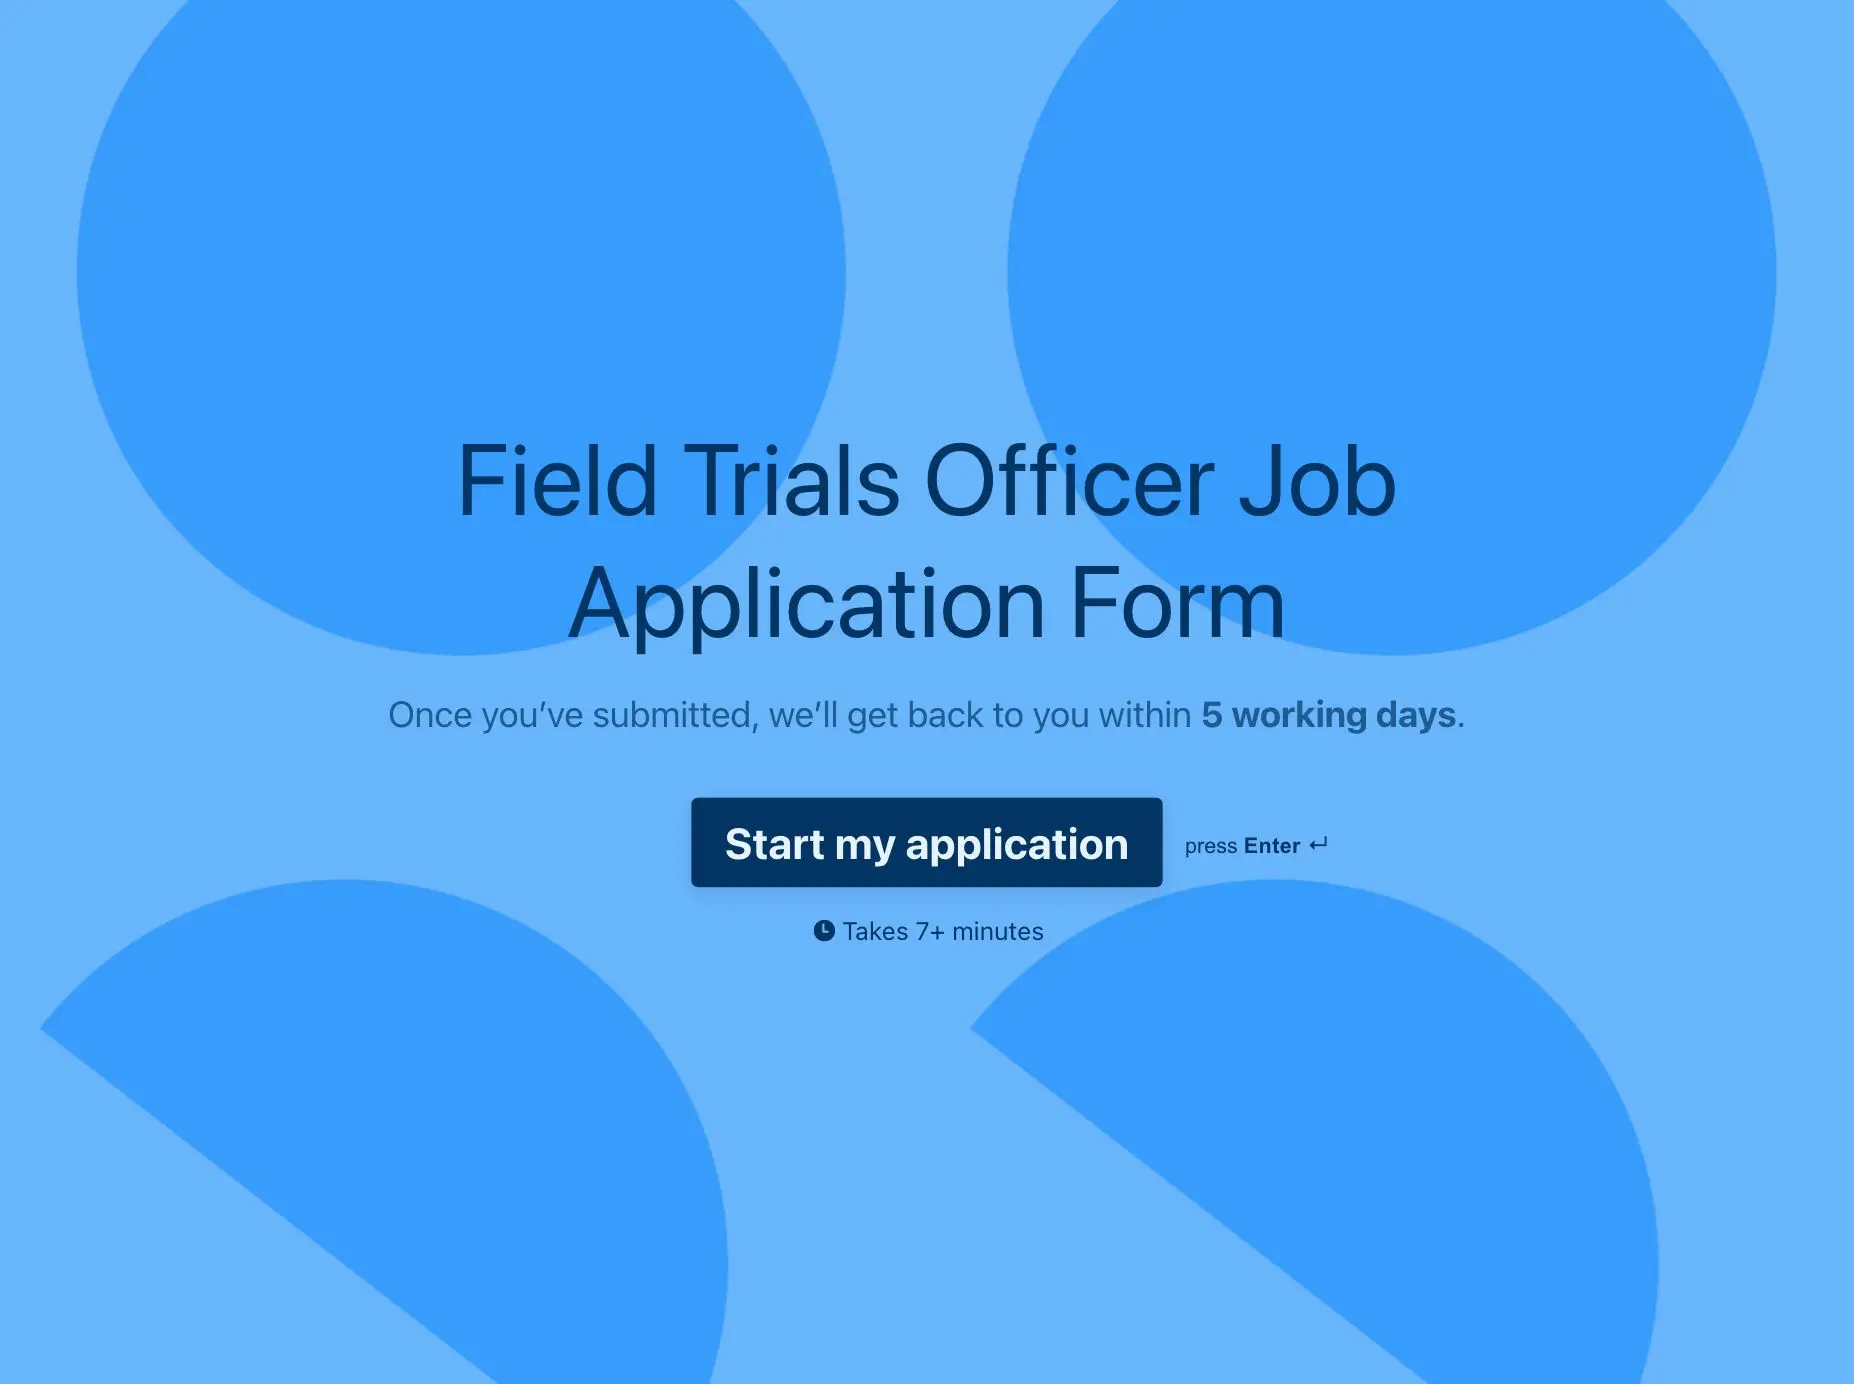 Field Trials Officer Job Application Form Template Hero